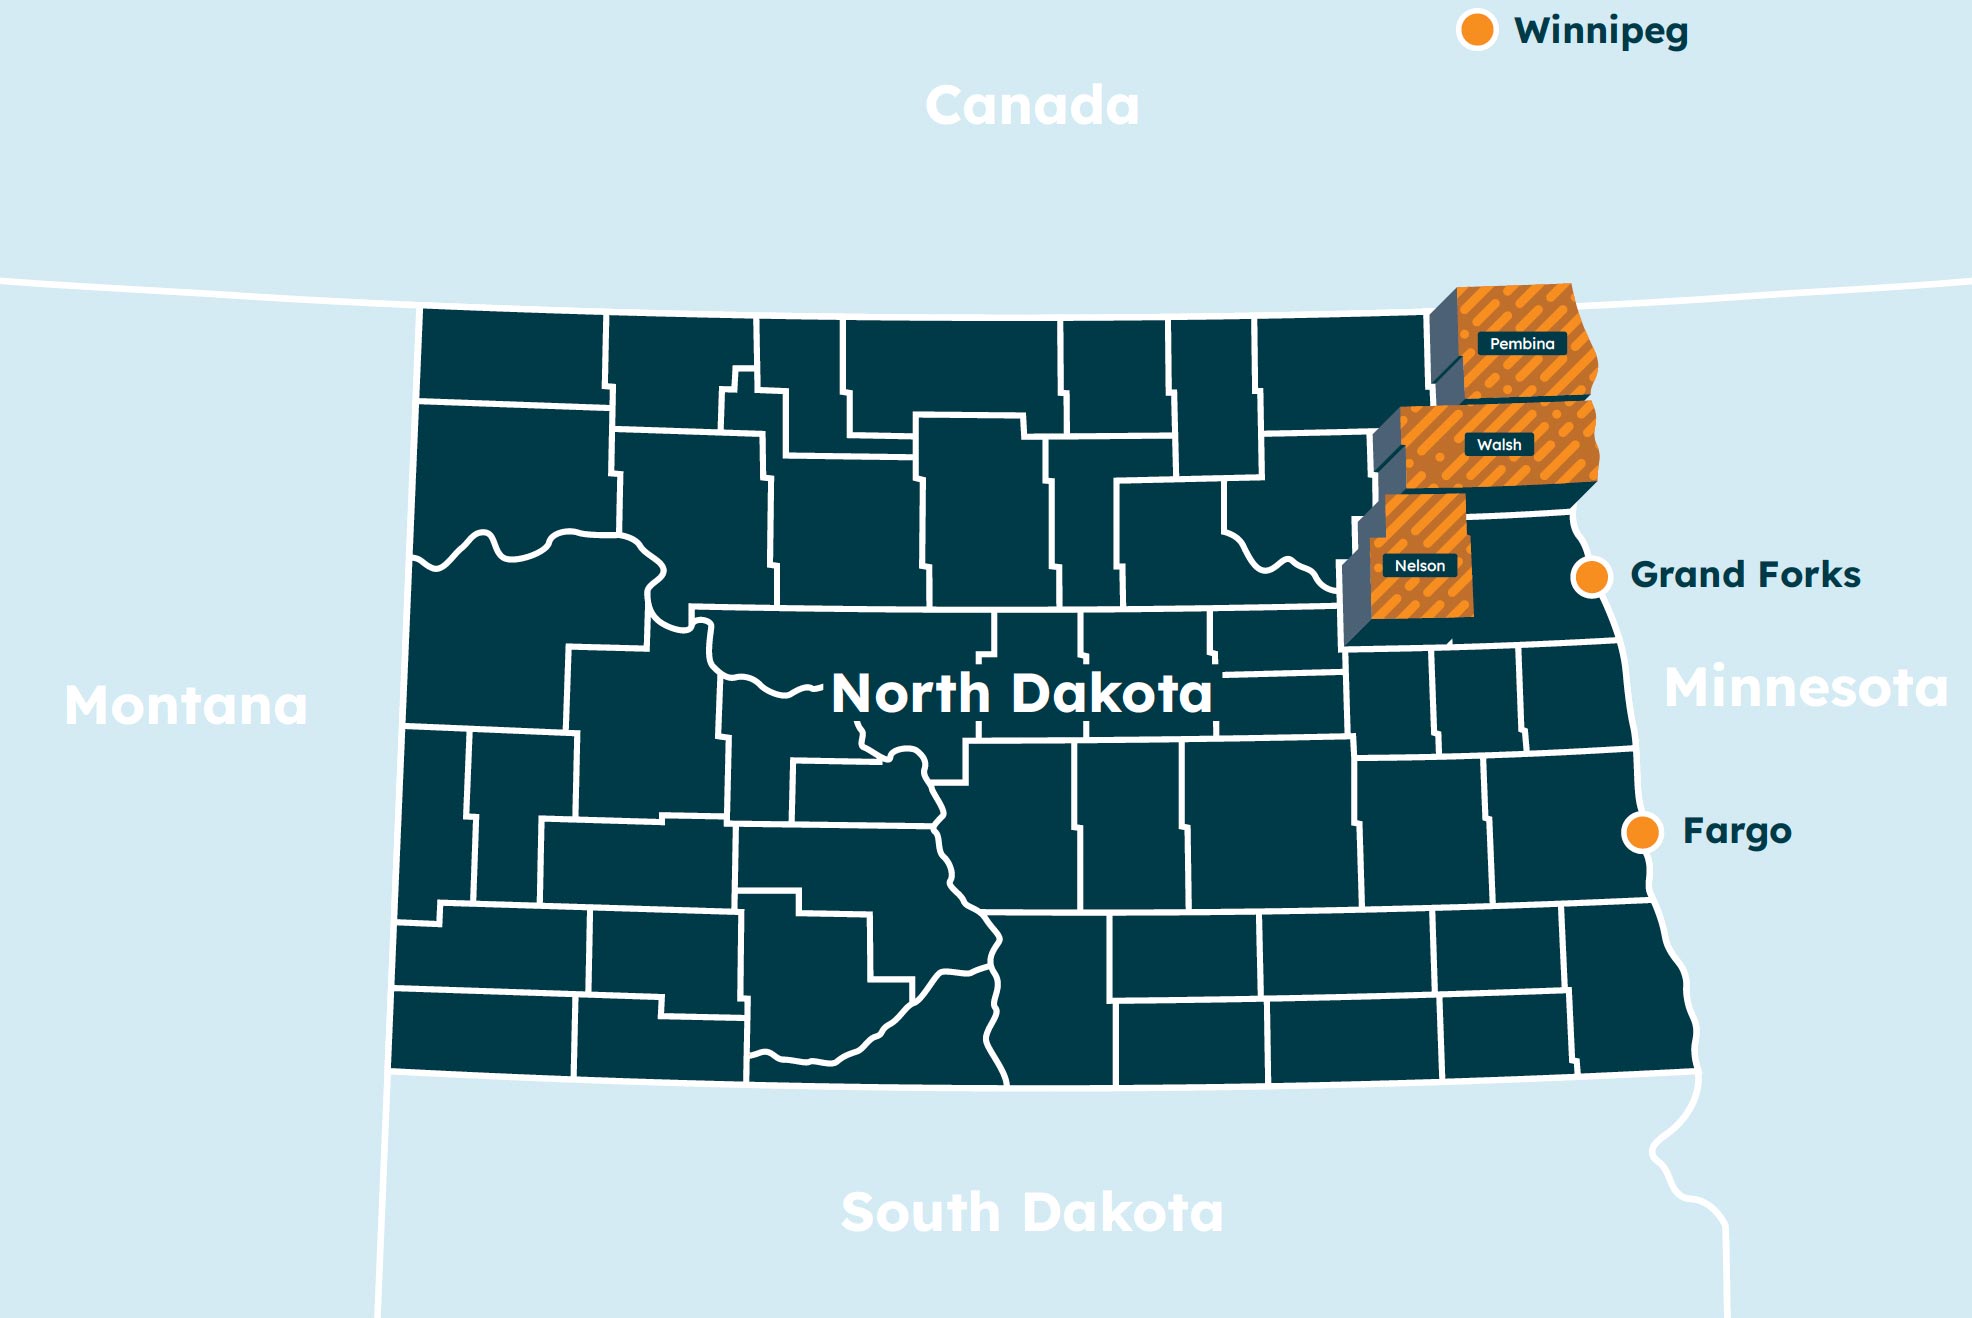 NE North Dakota is close to Winnipeg, Fargo and Grand Forks